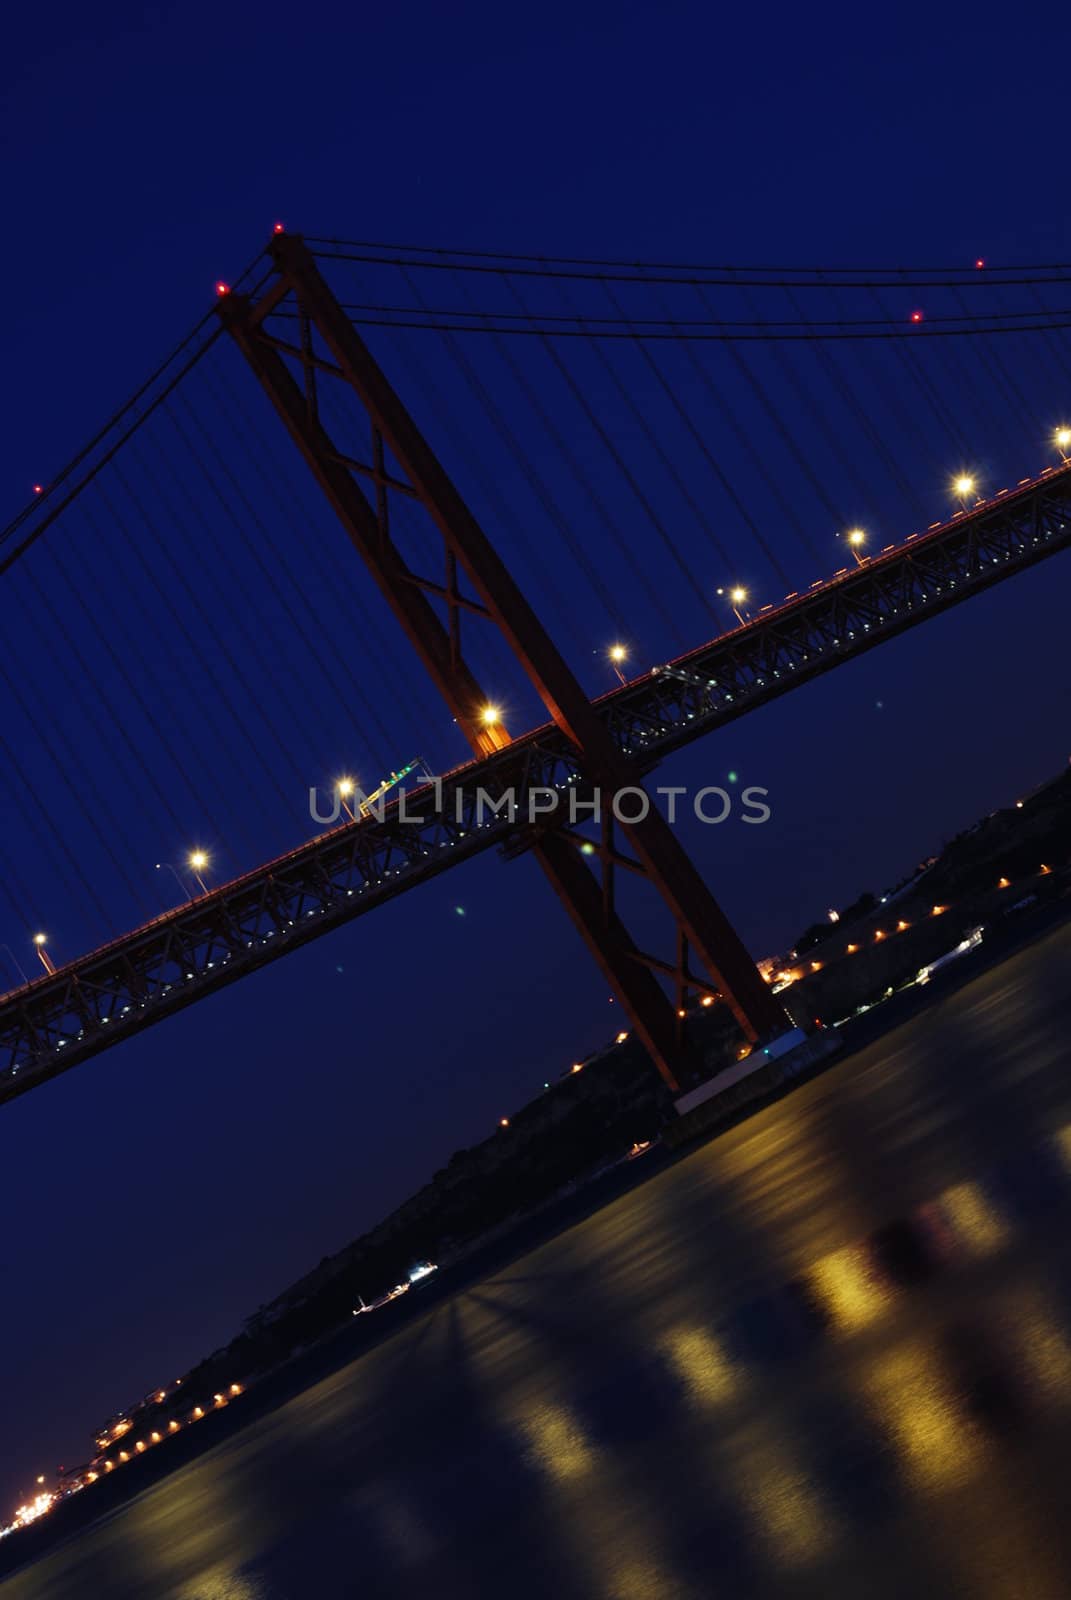 old Salazar bridge in Lisbon, Portugal (night shoot)